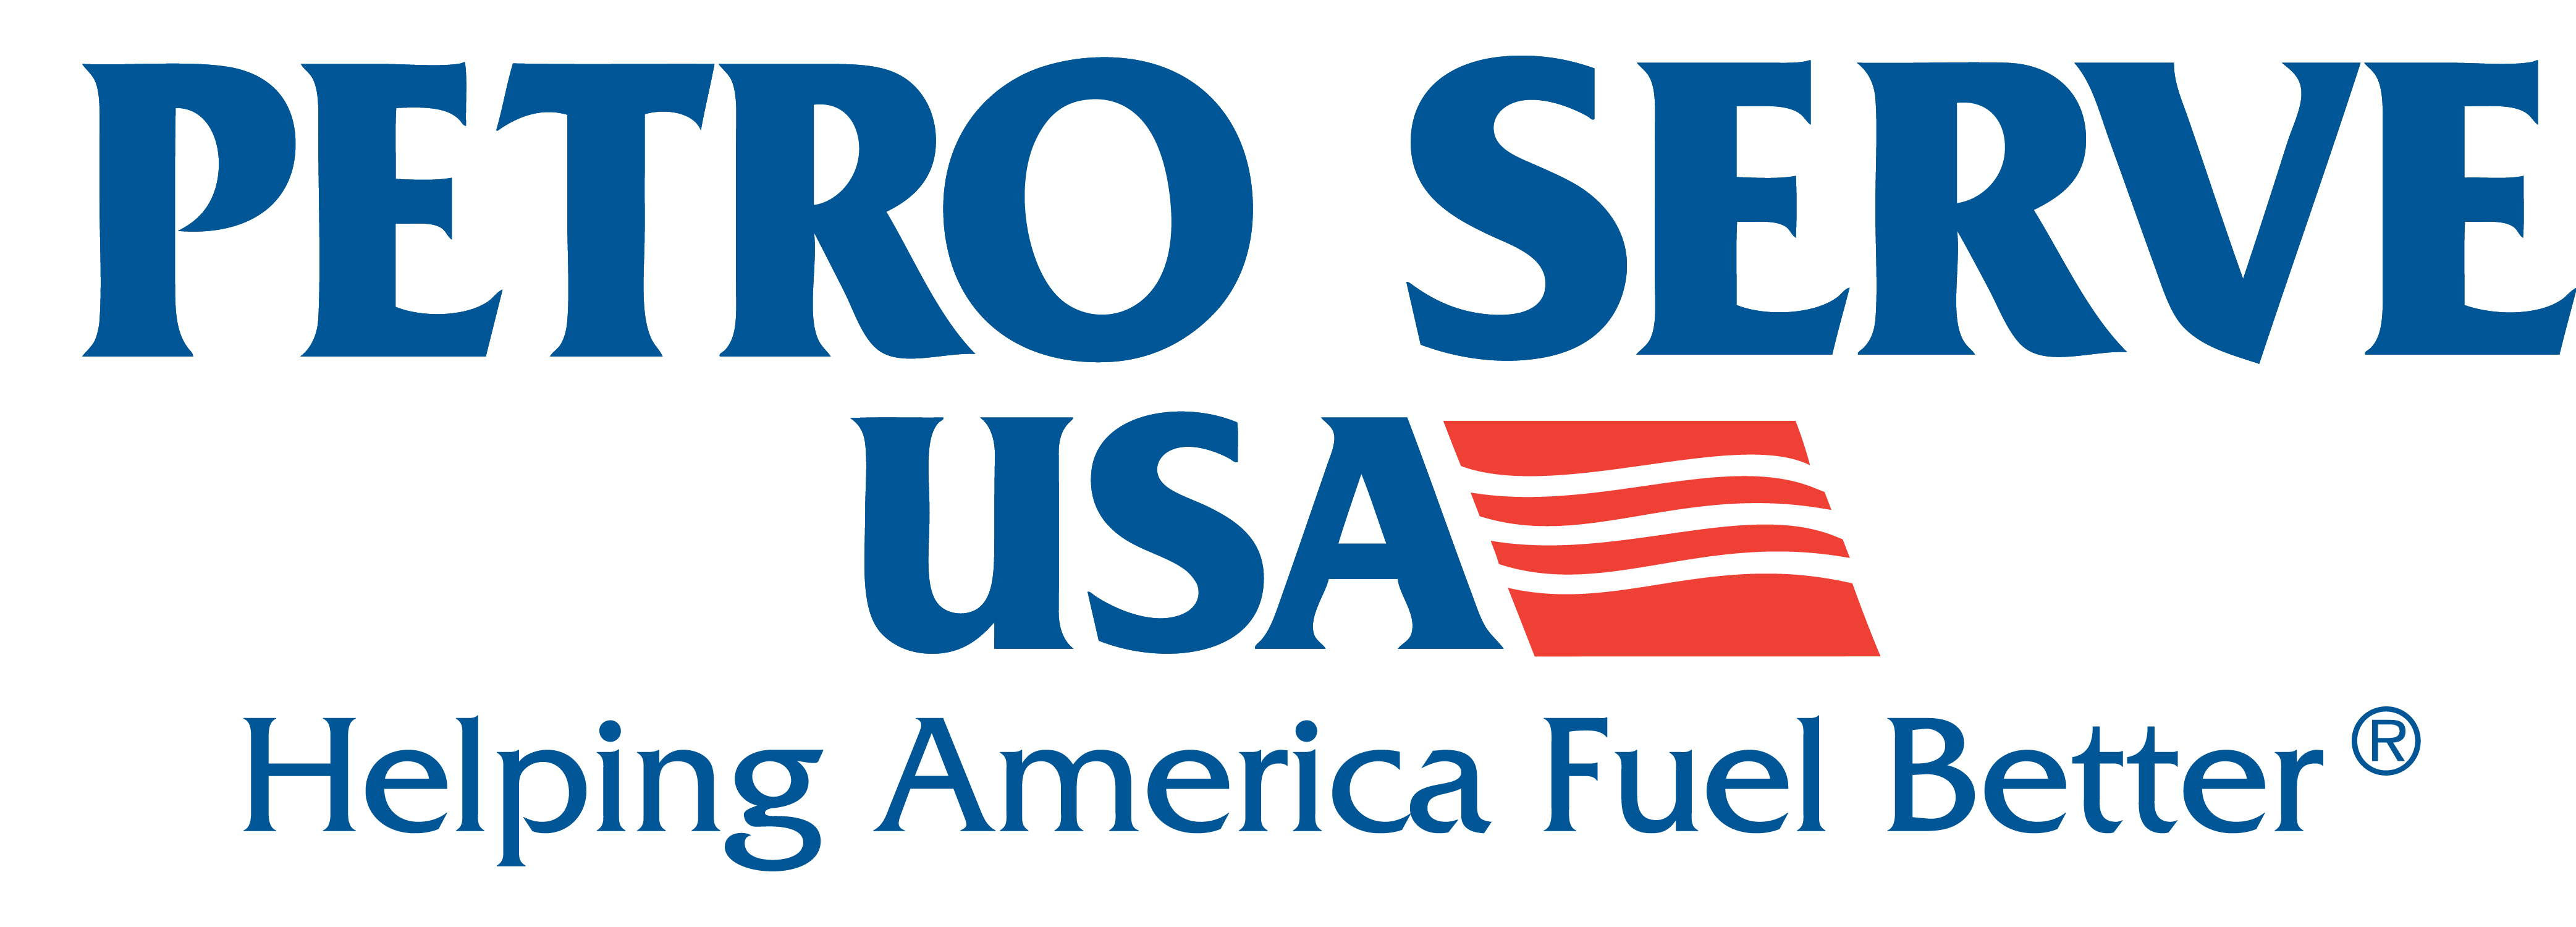 Petro Serve USA